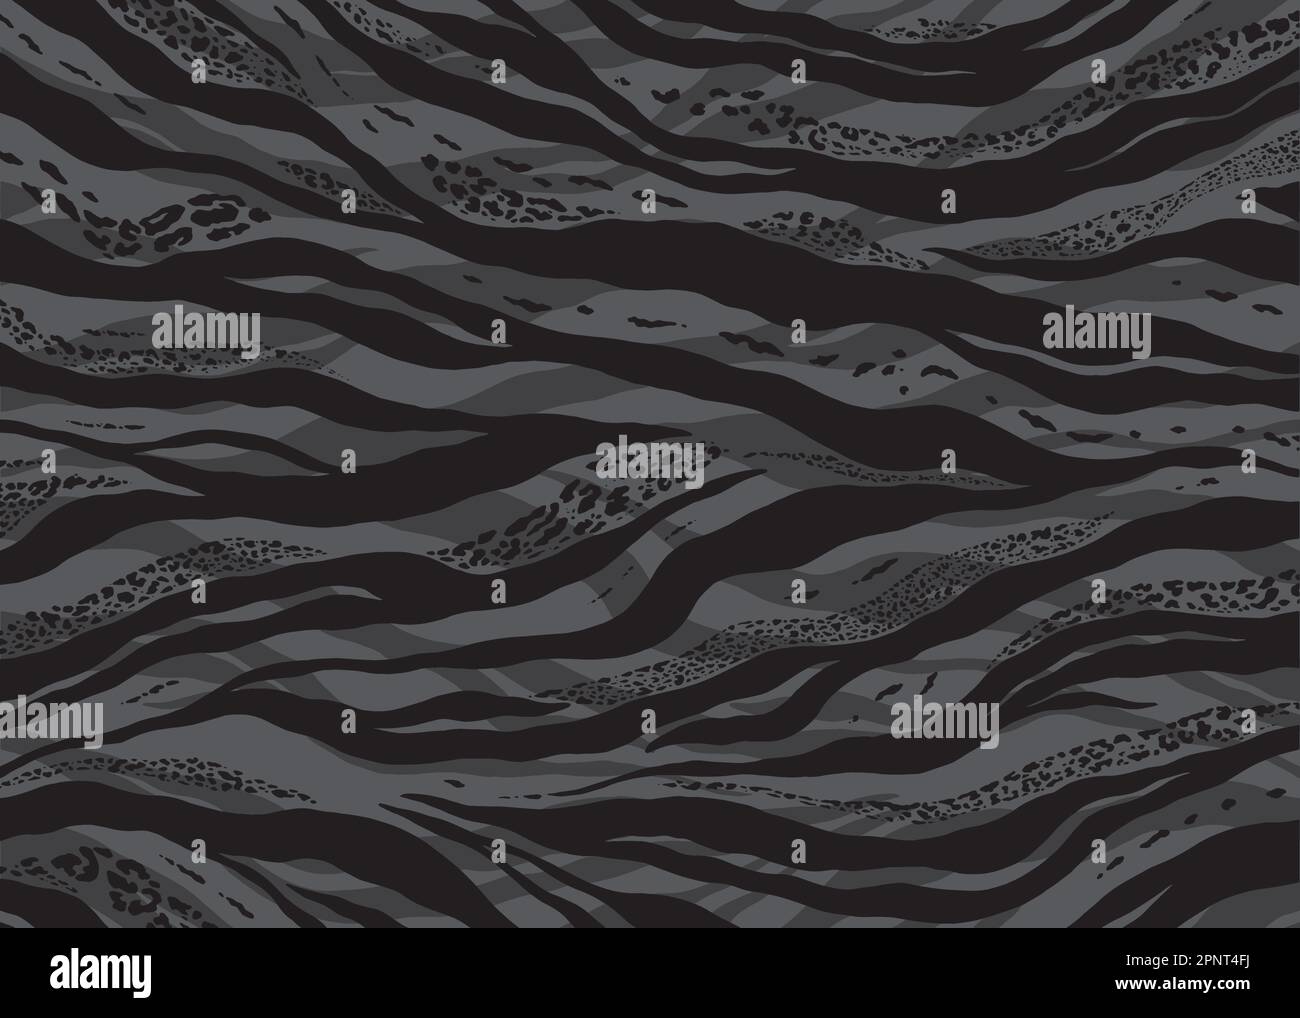 Abstract Zebra print pattern design. Vector illustration background. Stock Vector